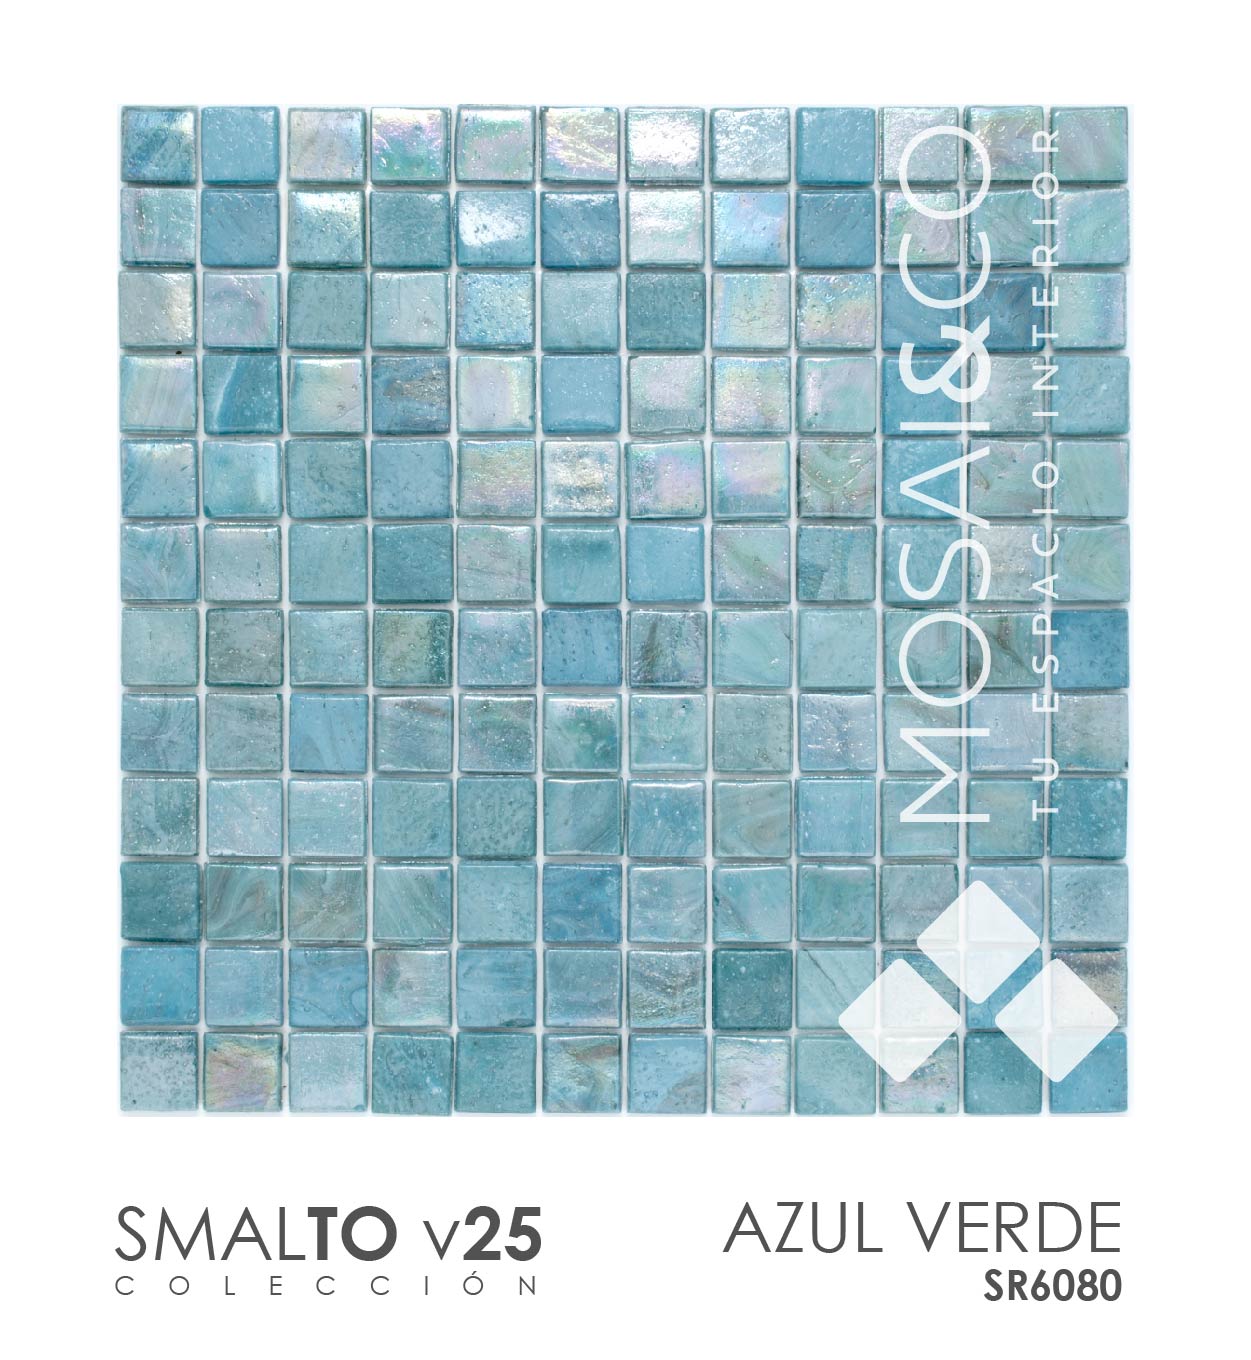 mosaico-decoracion-interiores-mosaiandco-coleccion-smalto_v25_azulverde_sr6080